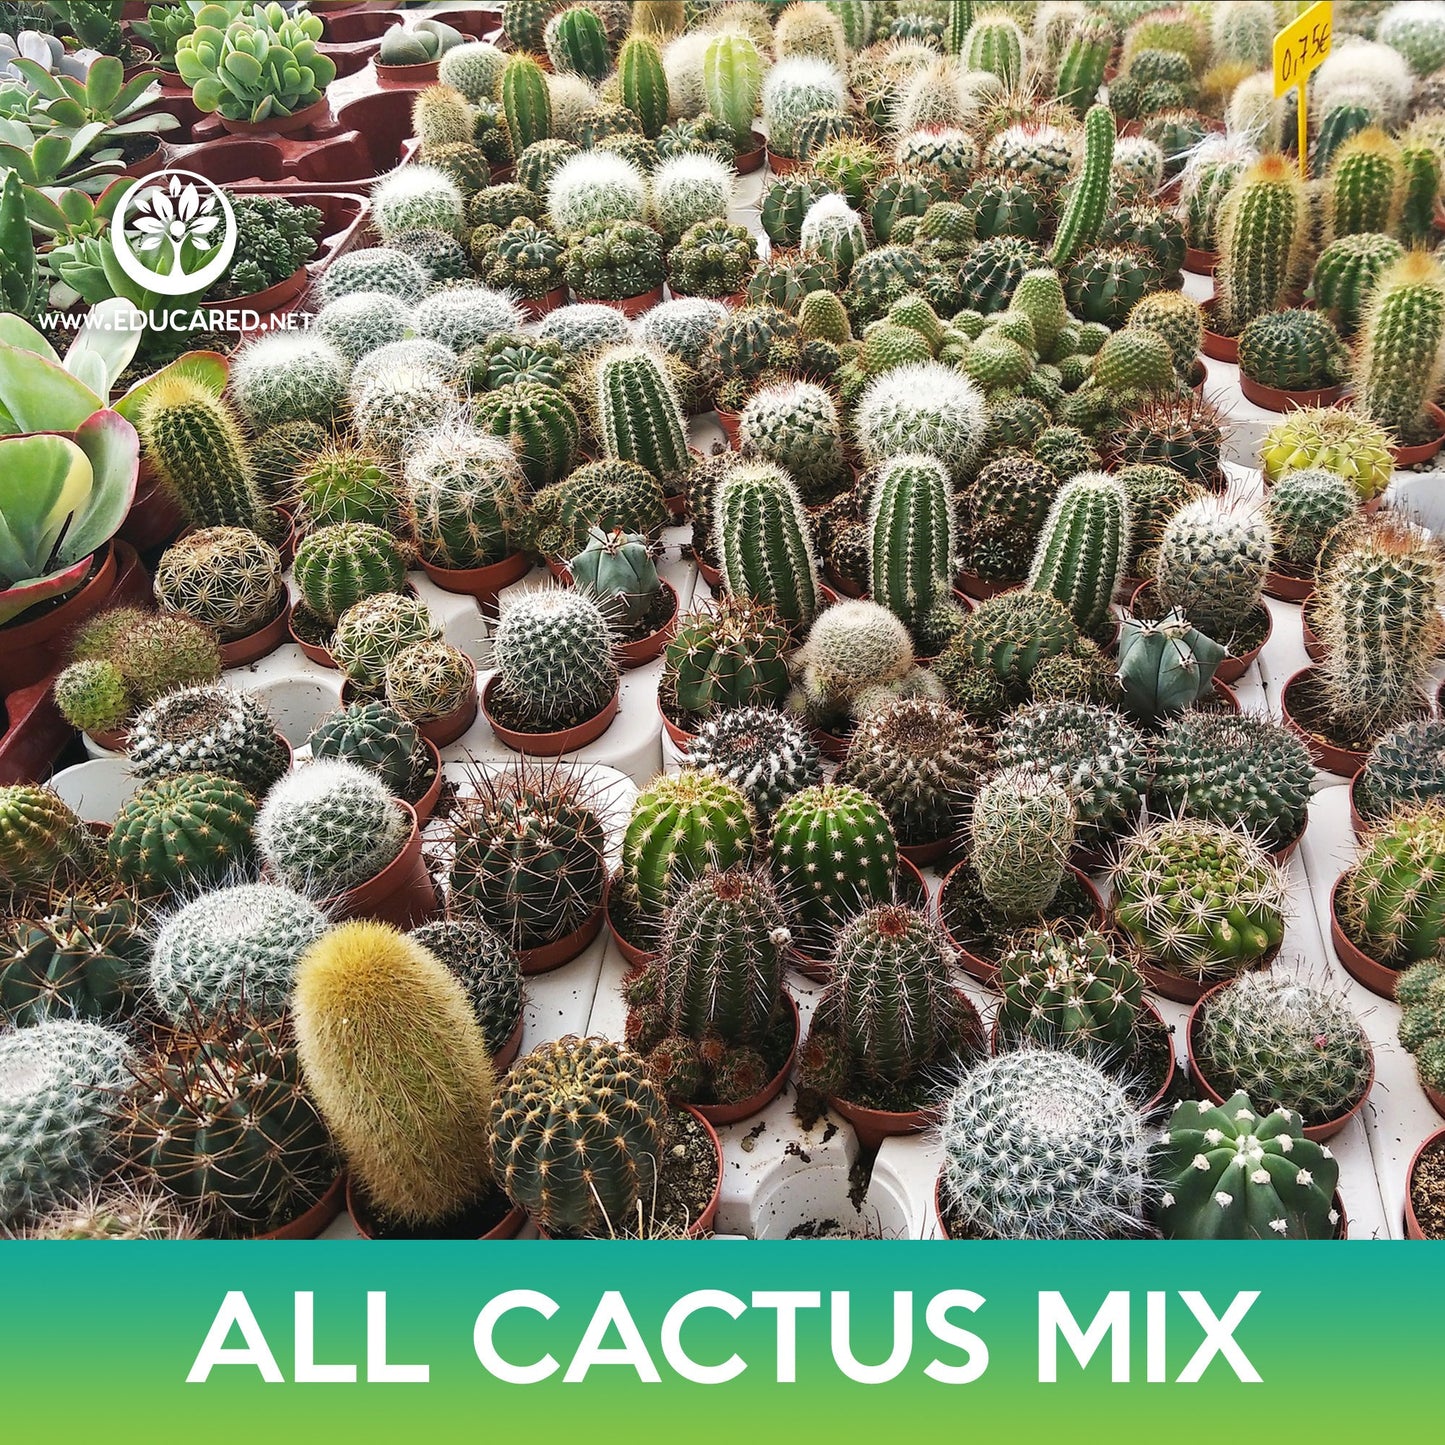 All Cactus Seeds Mix: Cereus, Golden Barrel, Parodia, Hedgehogs, Mammillarias, Melocactus, Notocactus, Opuntias, Organ pipes Seeds